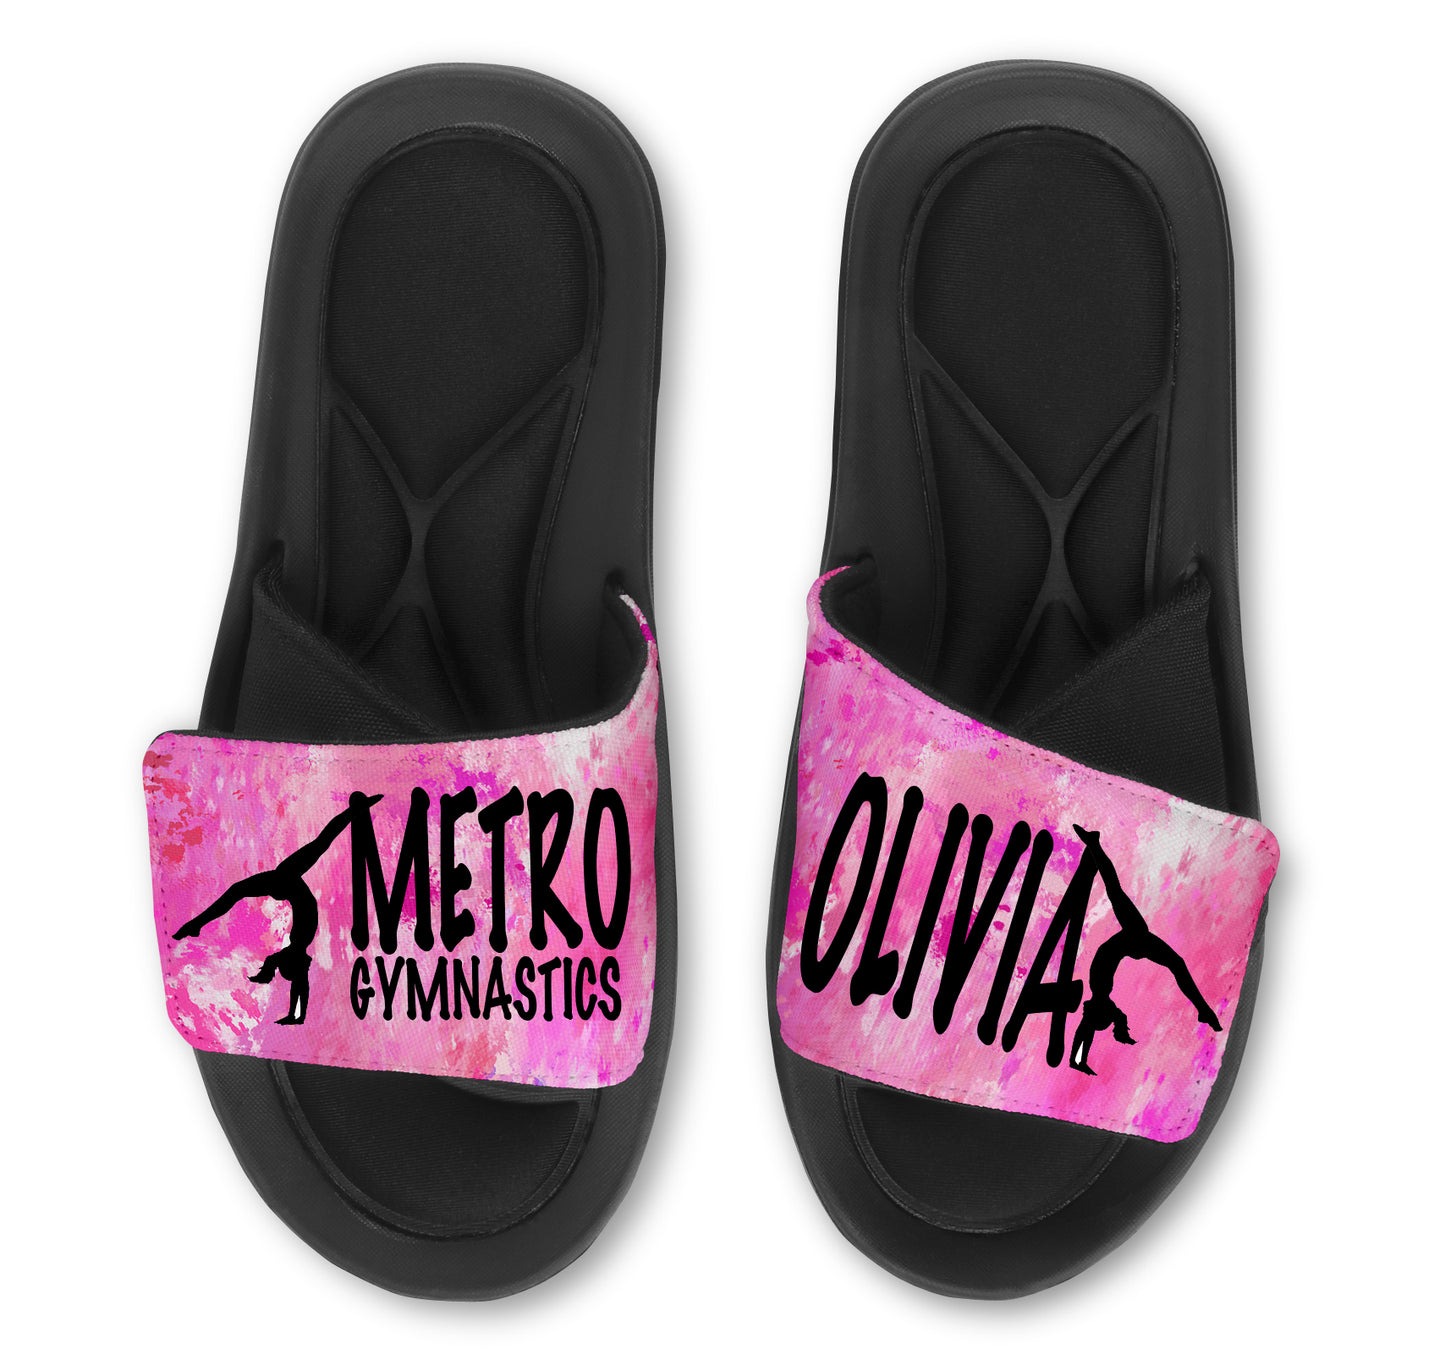 Personalized Gymnastics Slides / Sandals - MARBLE - Choose your Background Color!